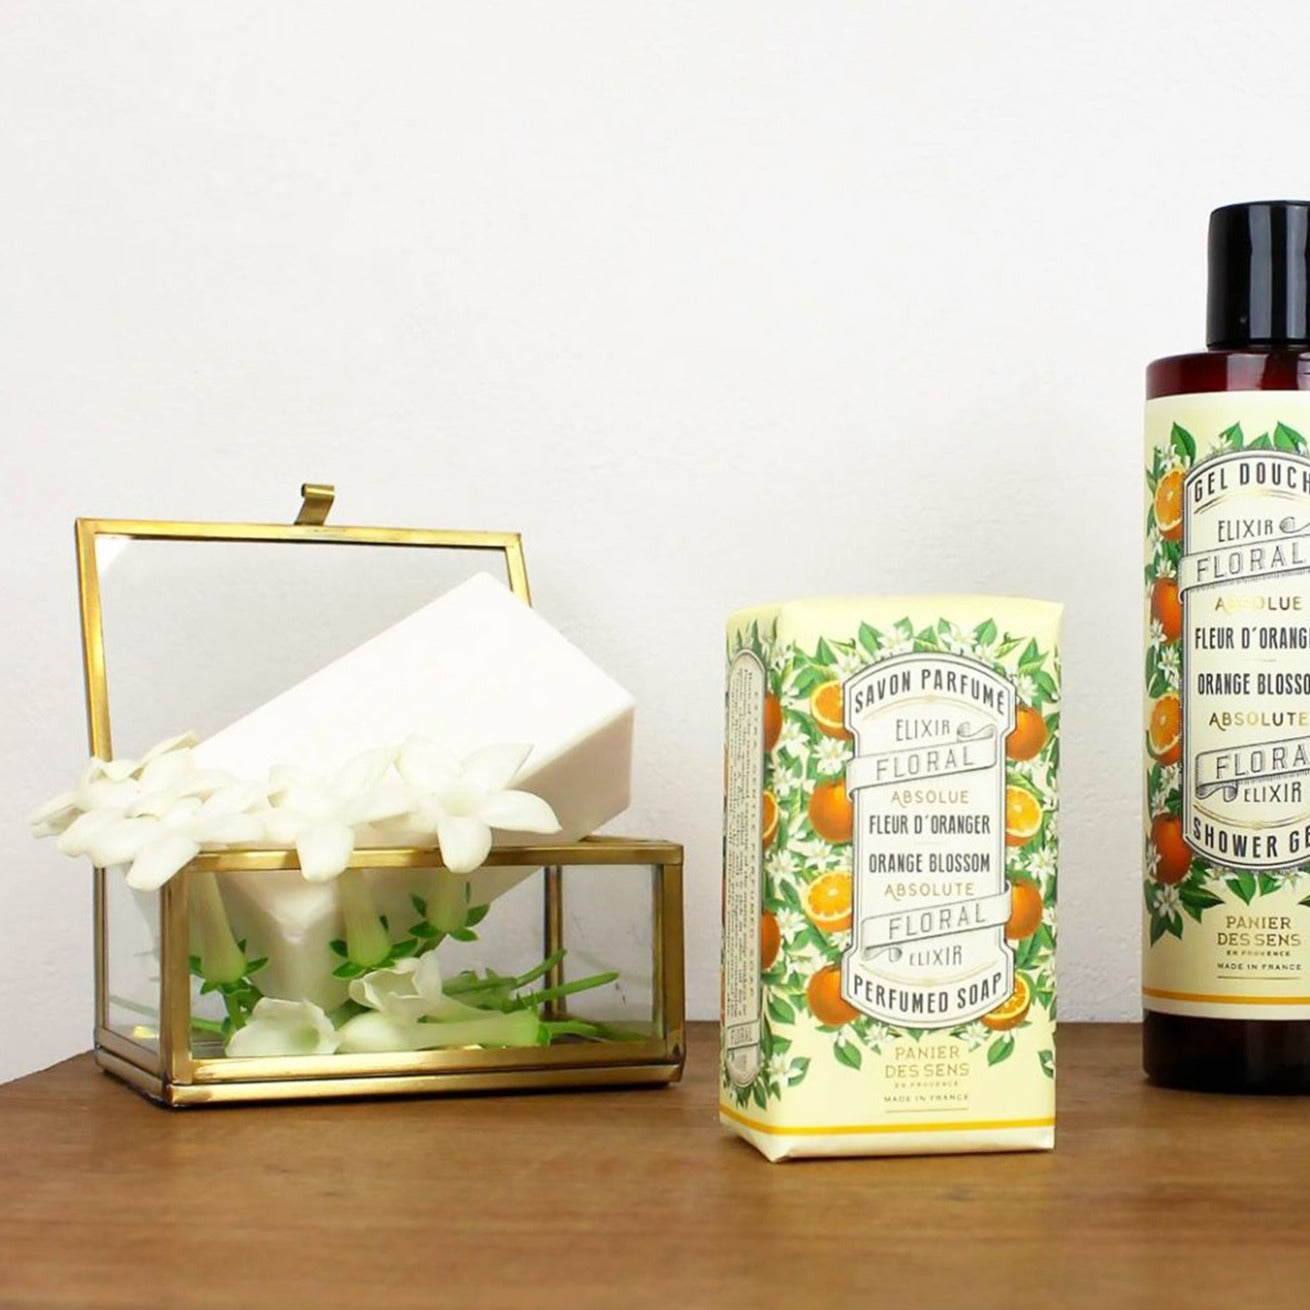 Panier des Sens Orange Blossom Perfumed Soap